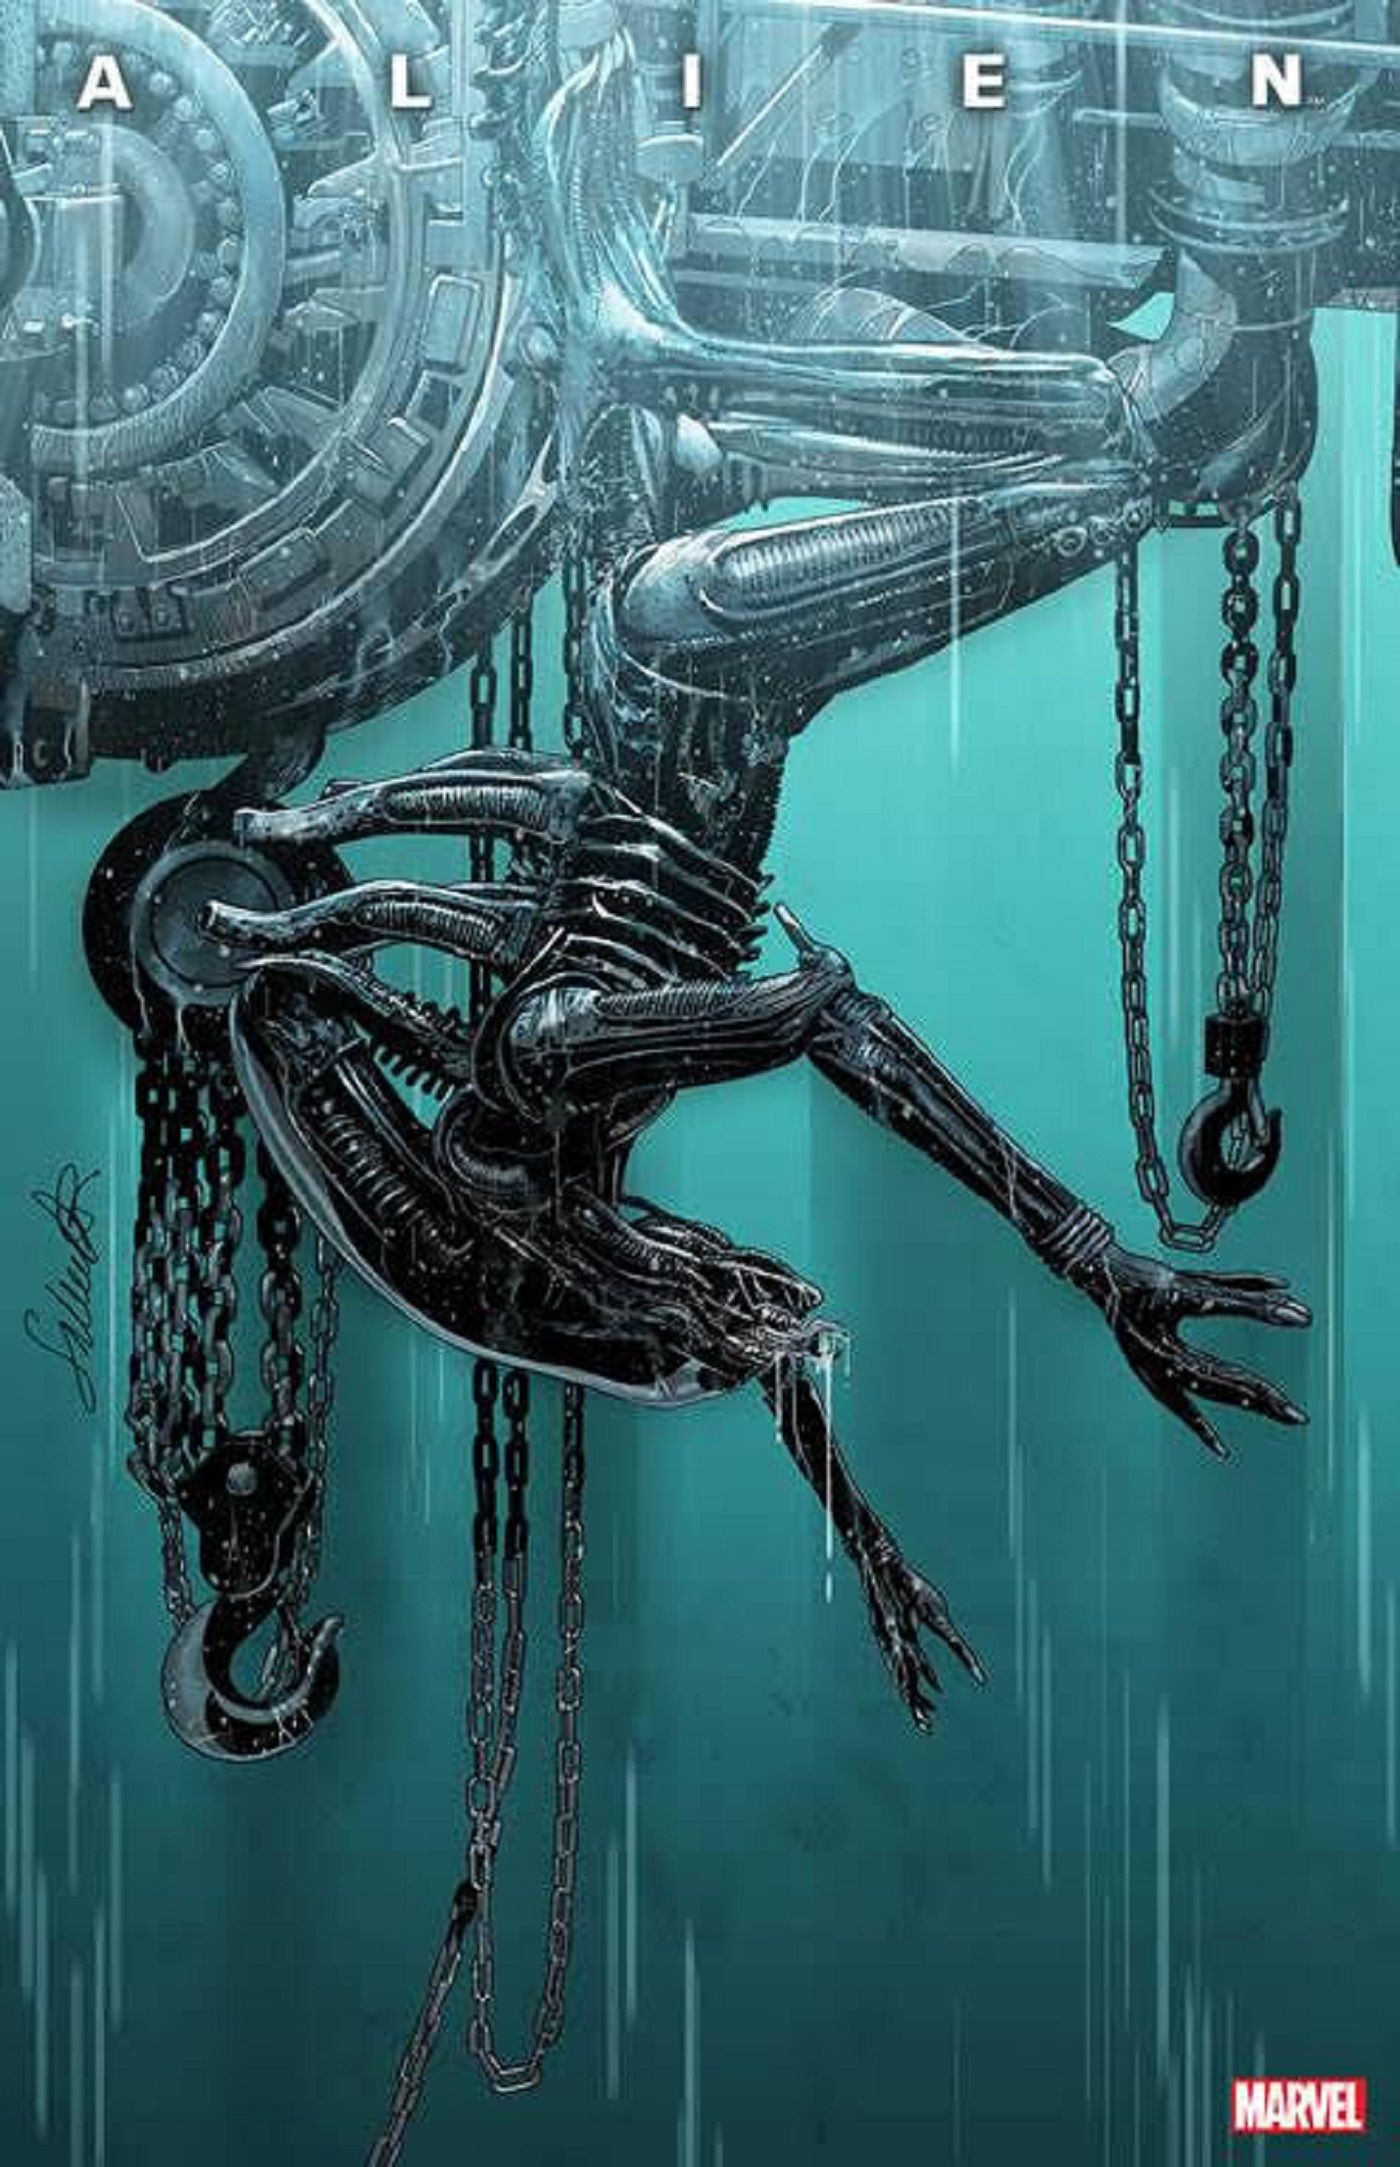 Alien #1 Reprint Cover by Salvador Larocca